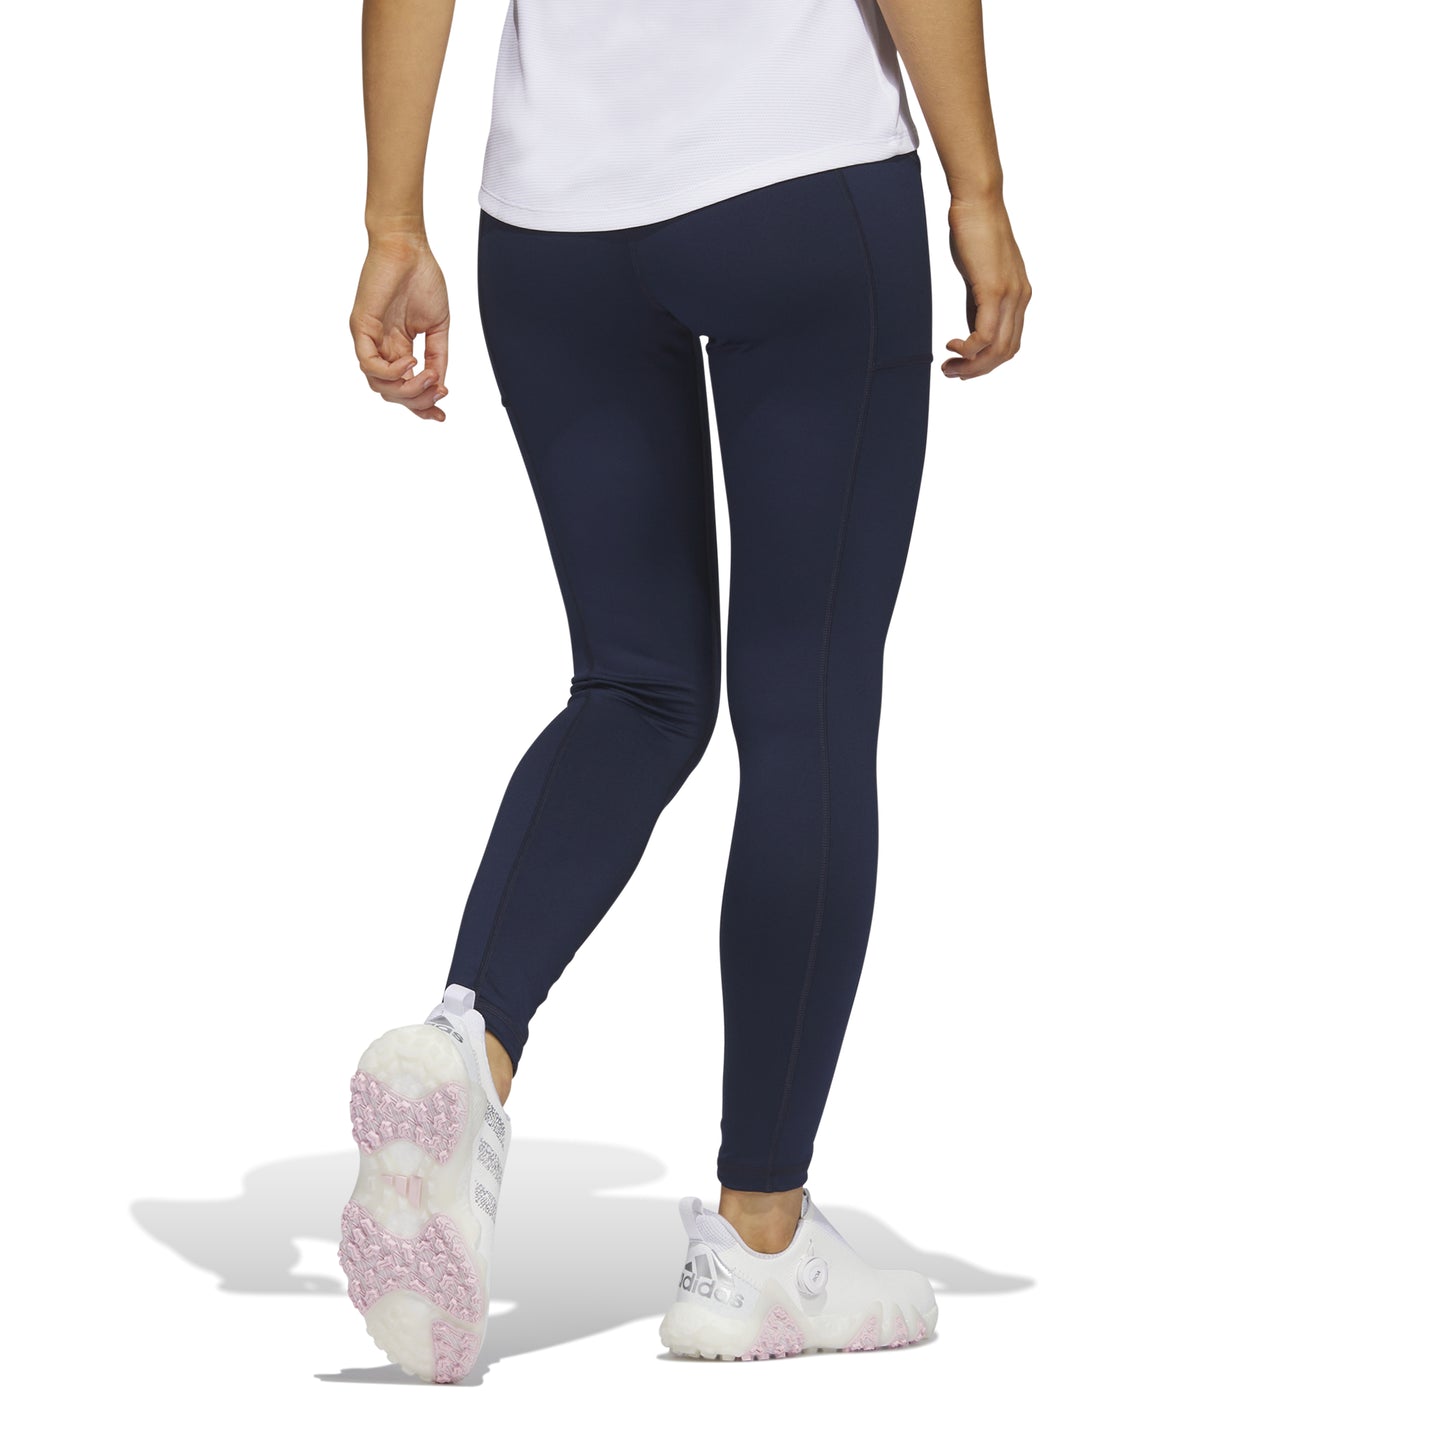 Adidas A1000 - Women's Pocket Leggings